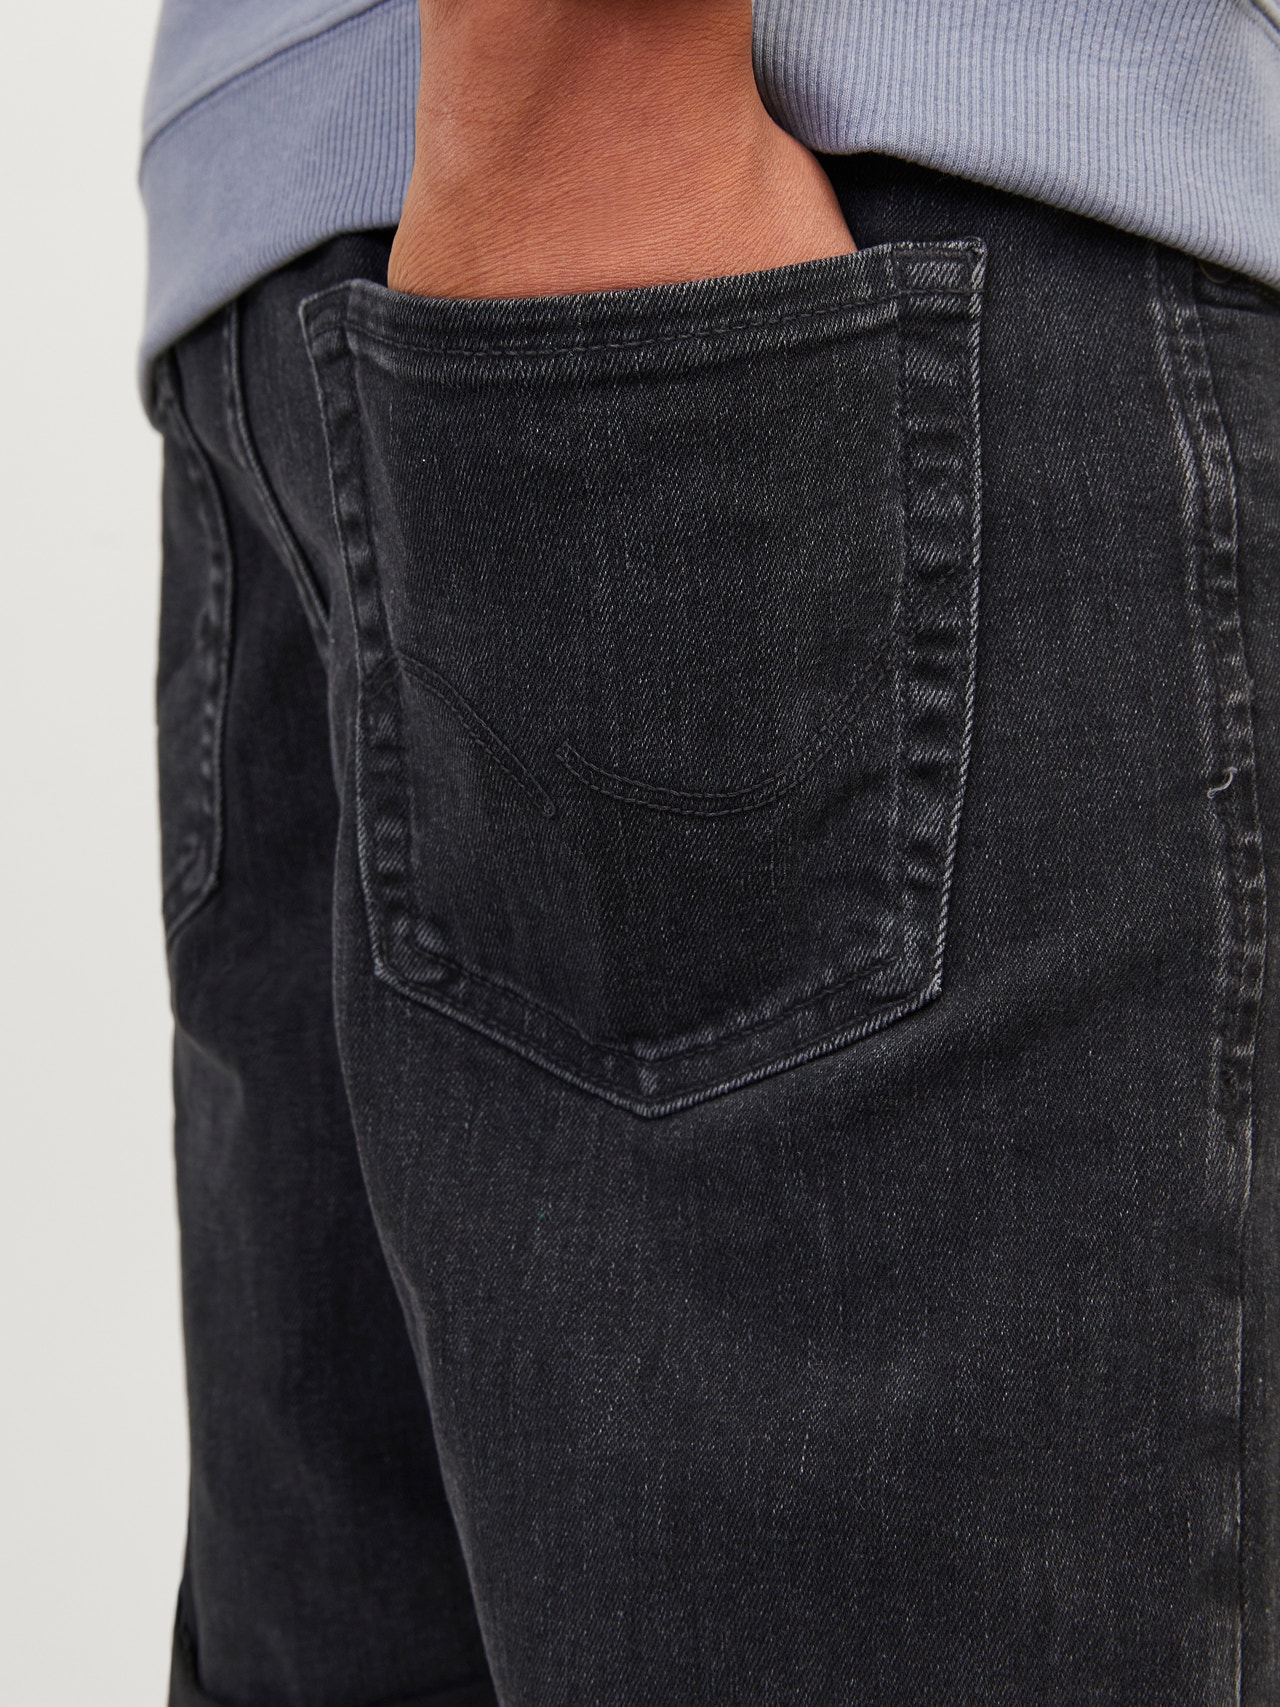 Jack & Jones Relaxed Fit Jeans Shorts Für jungs -Black Denim - 12256369